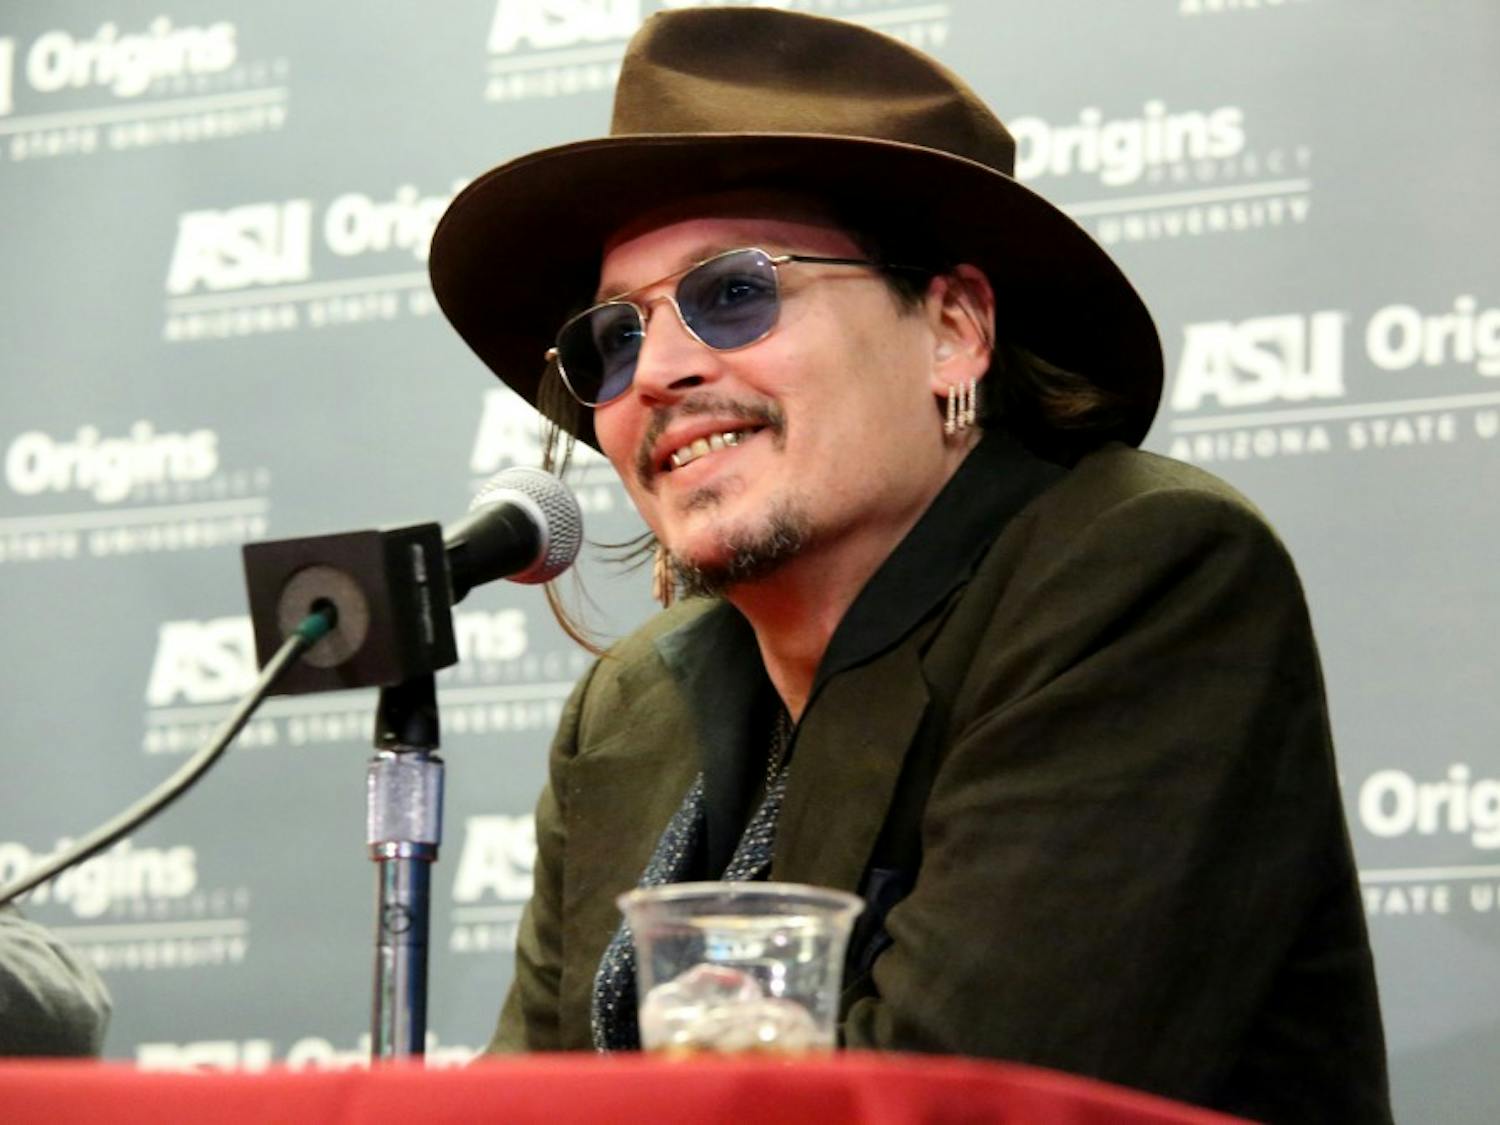 Johnny Depp comes to ASU for Origins Project